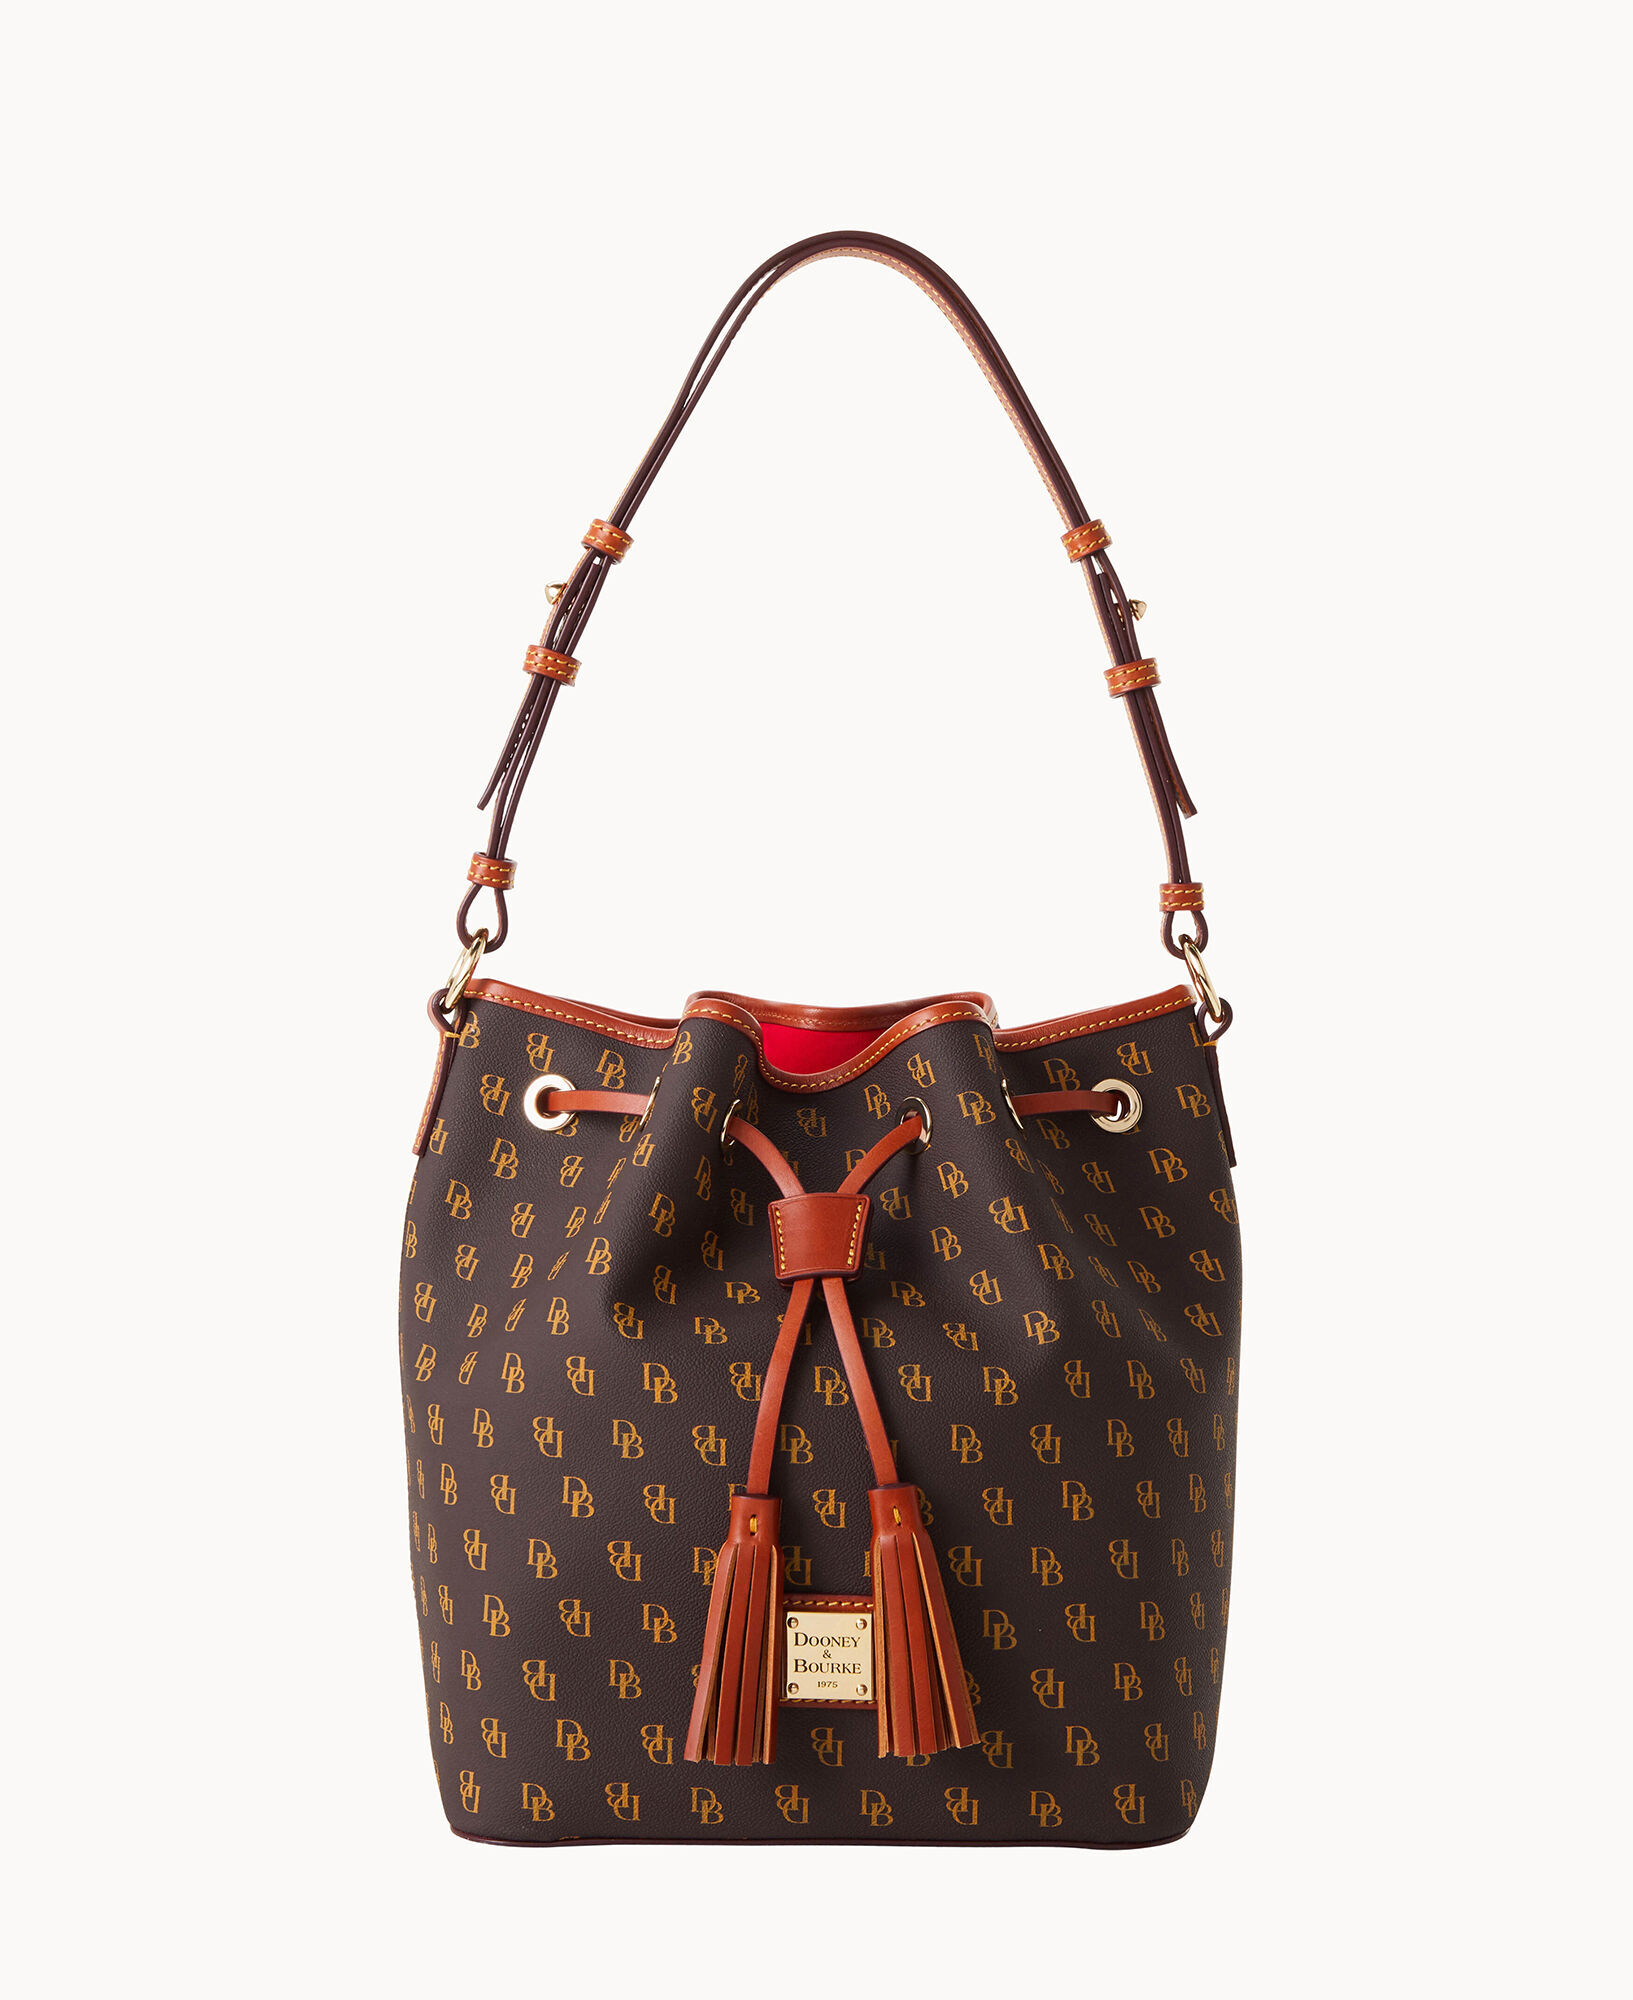 Dooney & Bourke Handbag, Monogram Crossbody Bucket - Brown Tmoro: Handbags